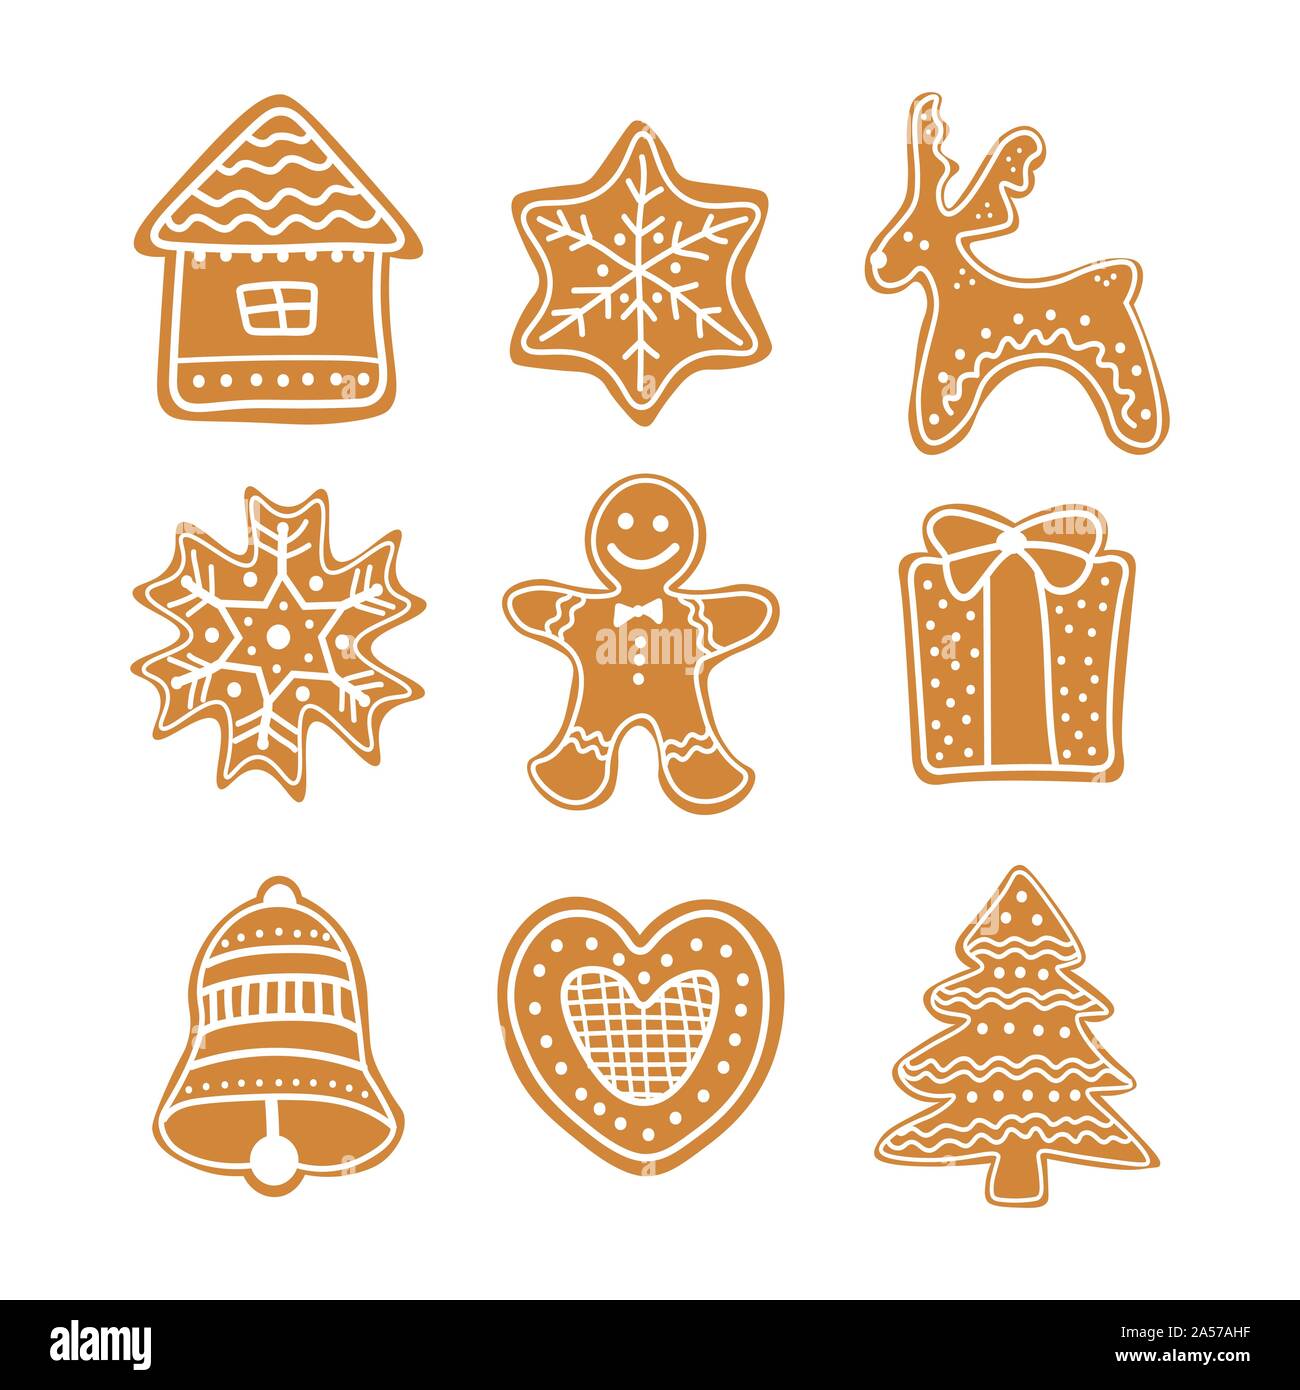 Set of Gingerbread cookies Christmas. Christmas cookies collection with gingerbread cookies figures - Christmas tree, gingerbread men, star, snowman, Stock Vector